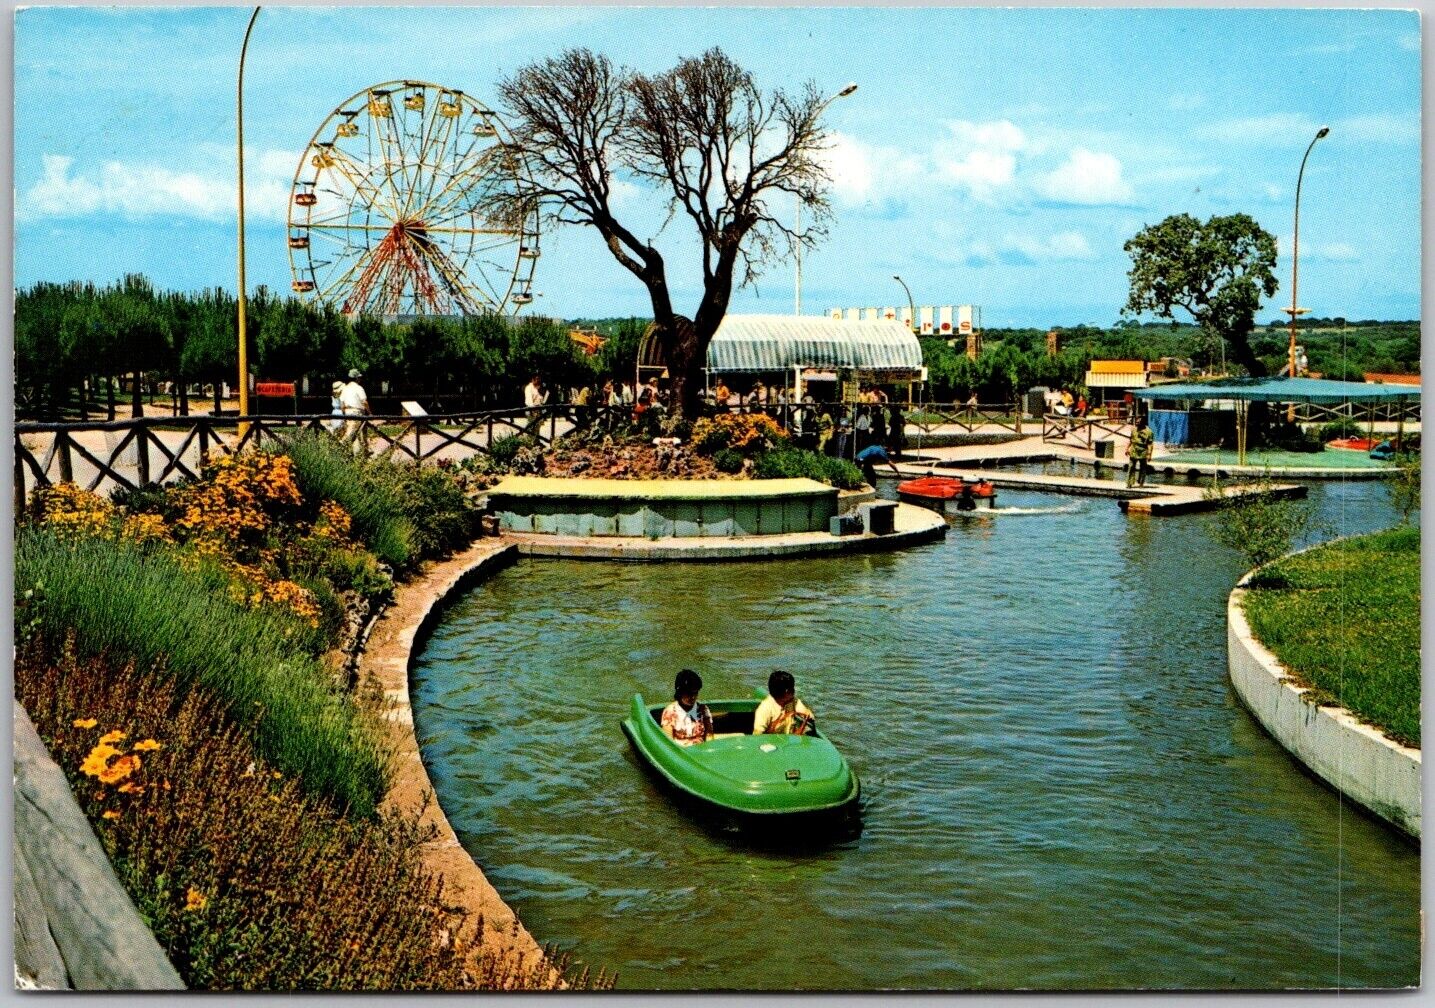 Postcard: Parque de Atracciones - Amusement Park, Madrid, Spain A131